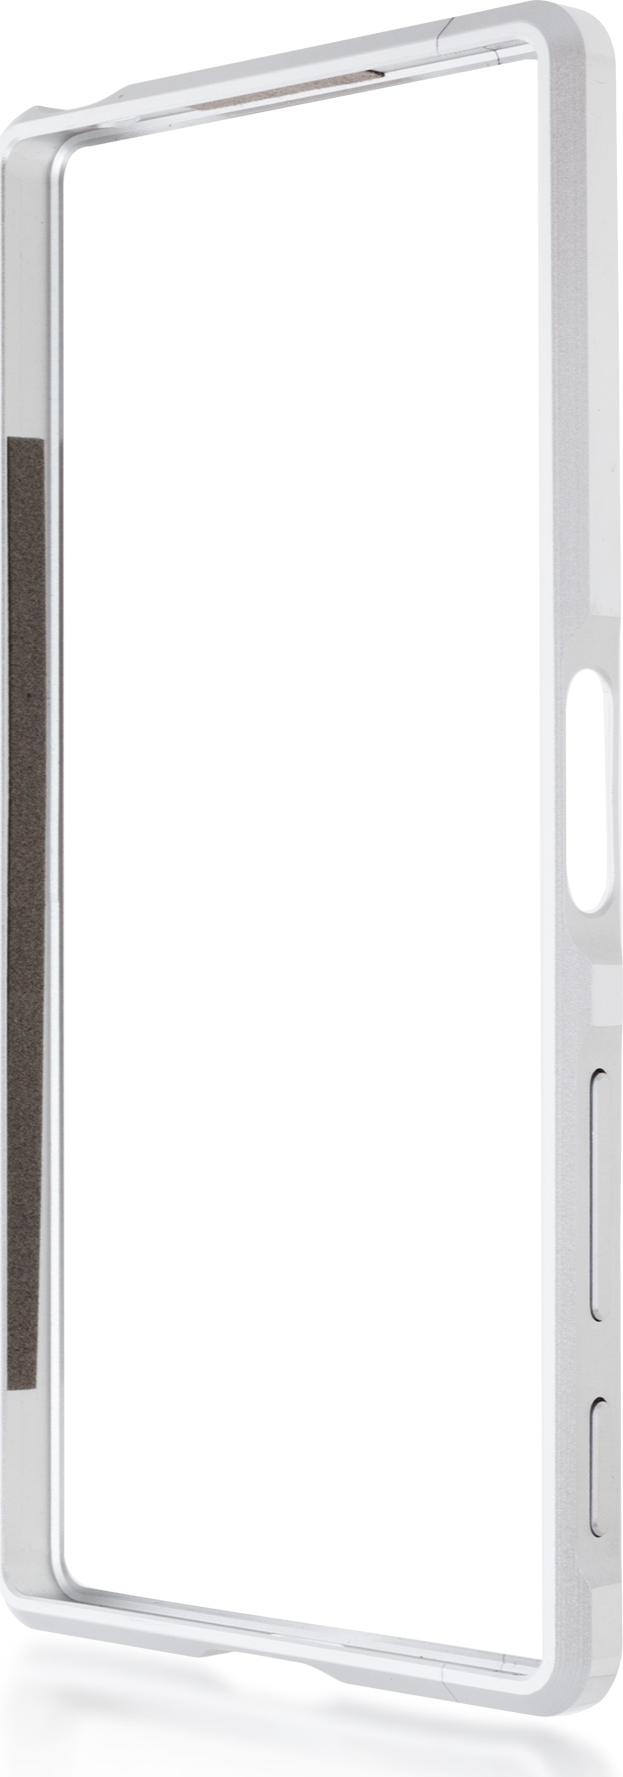 Чехол Brosco BMP для Sony Xperia Z5 Premium, серебристый